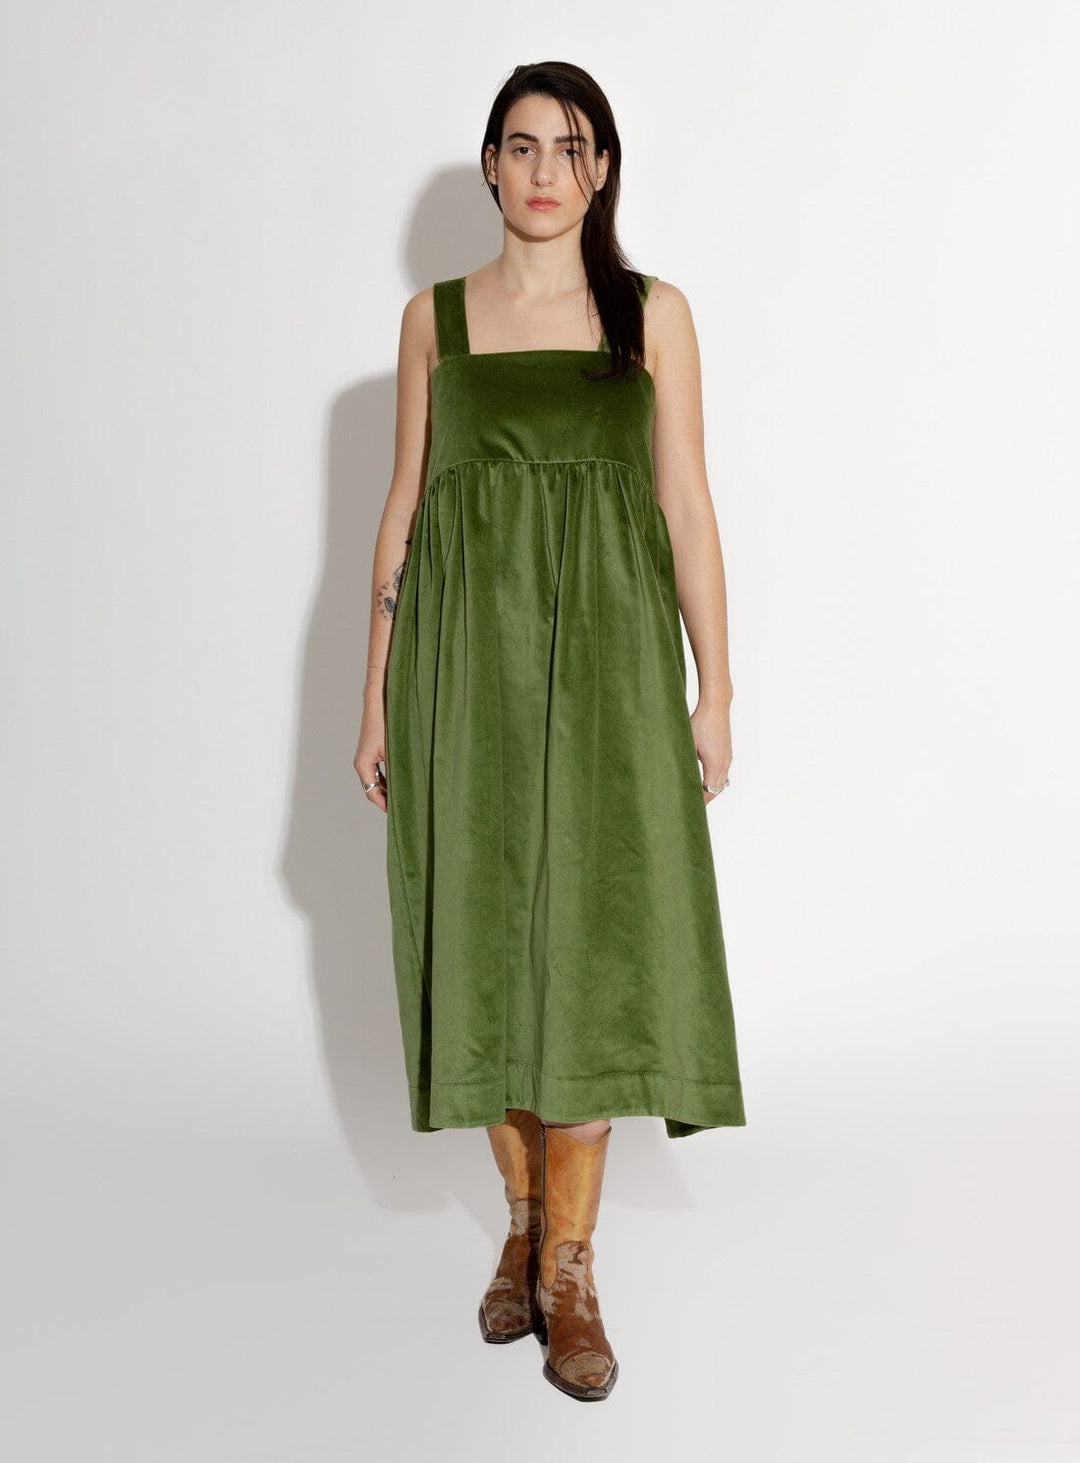 Elba Velvet Dress in Pine Dresses YBDFinds 